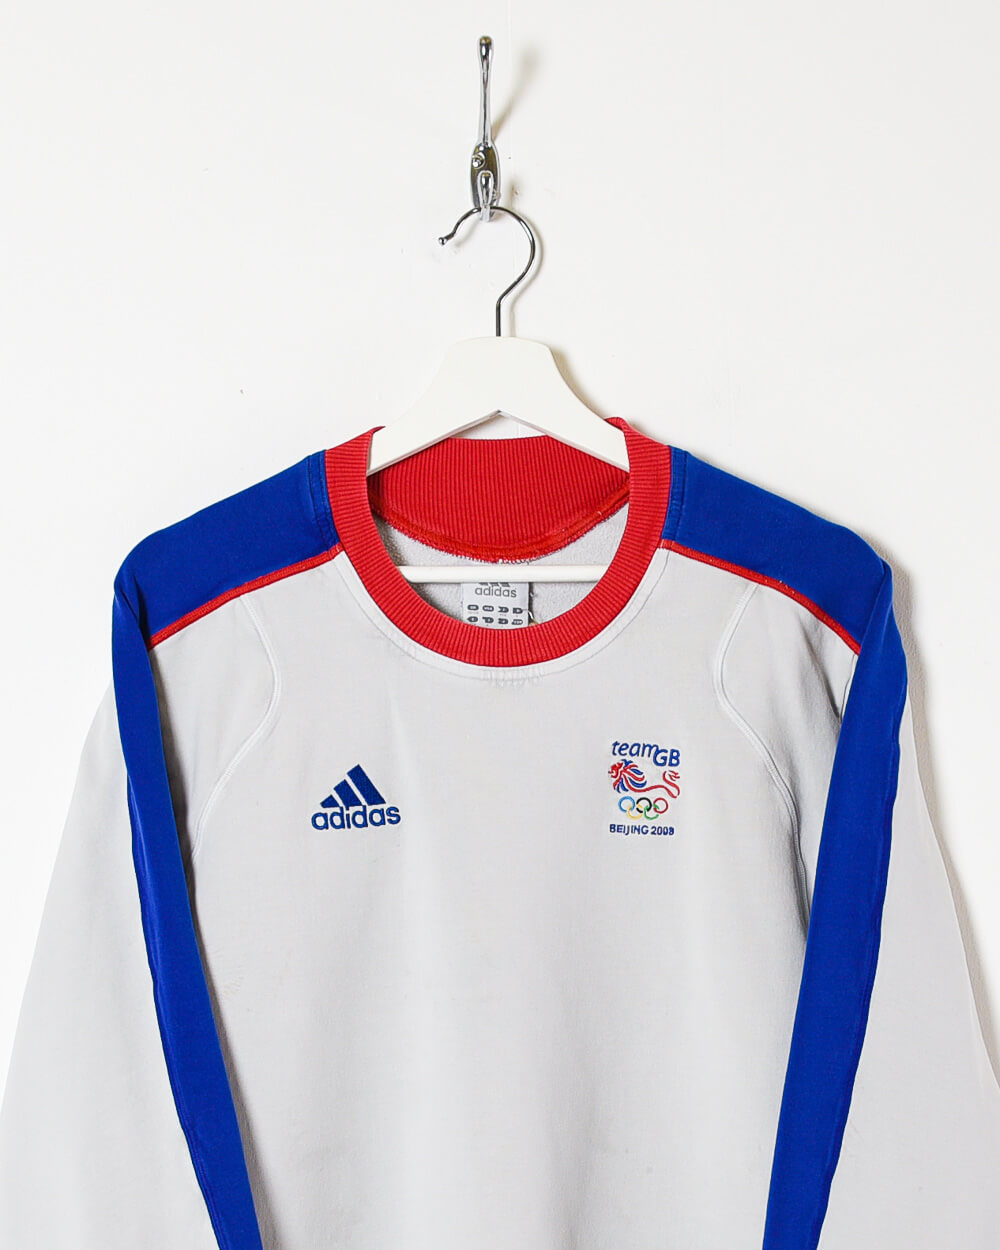 Stone Adidas Team GB Beijing Olympics 2008 Sweatshirt - Small